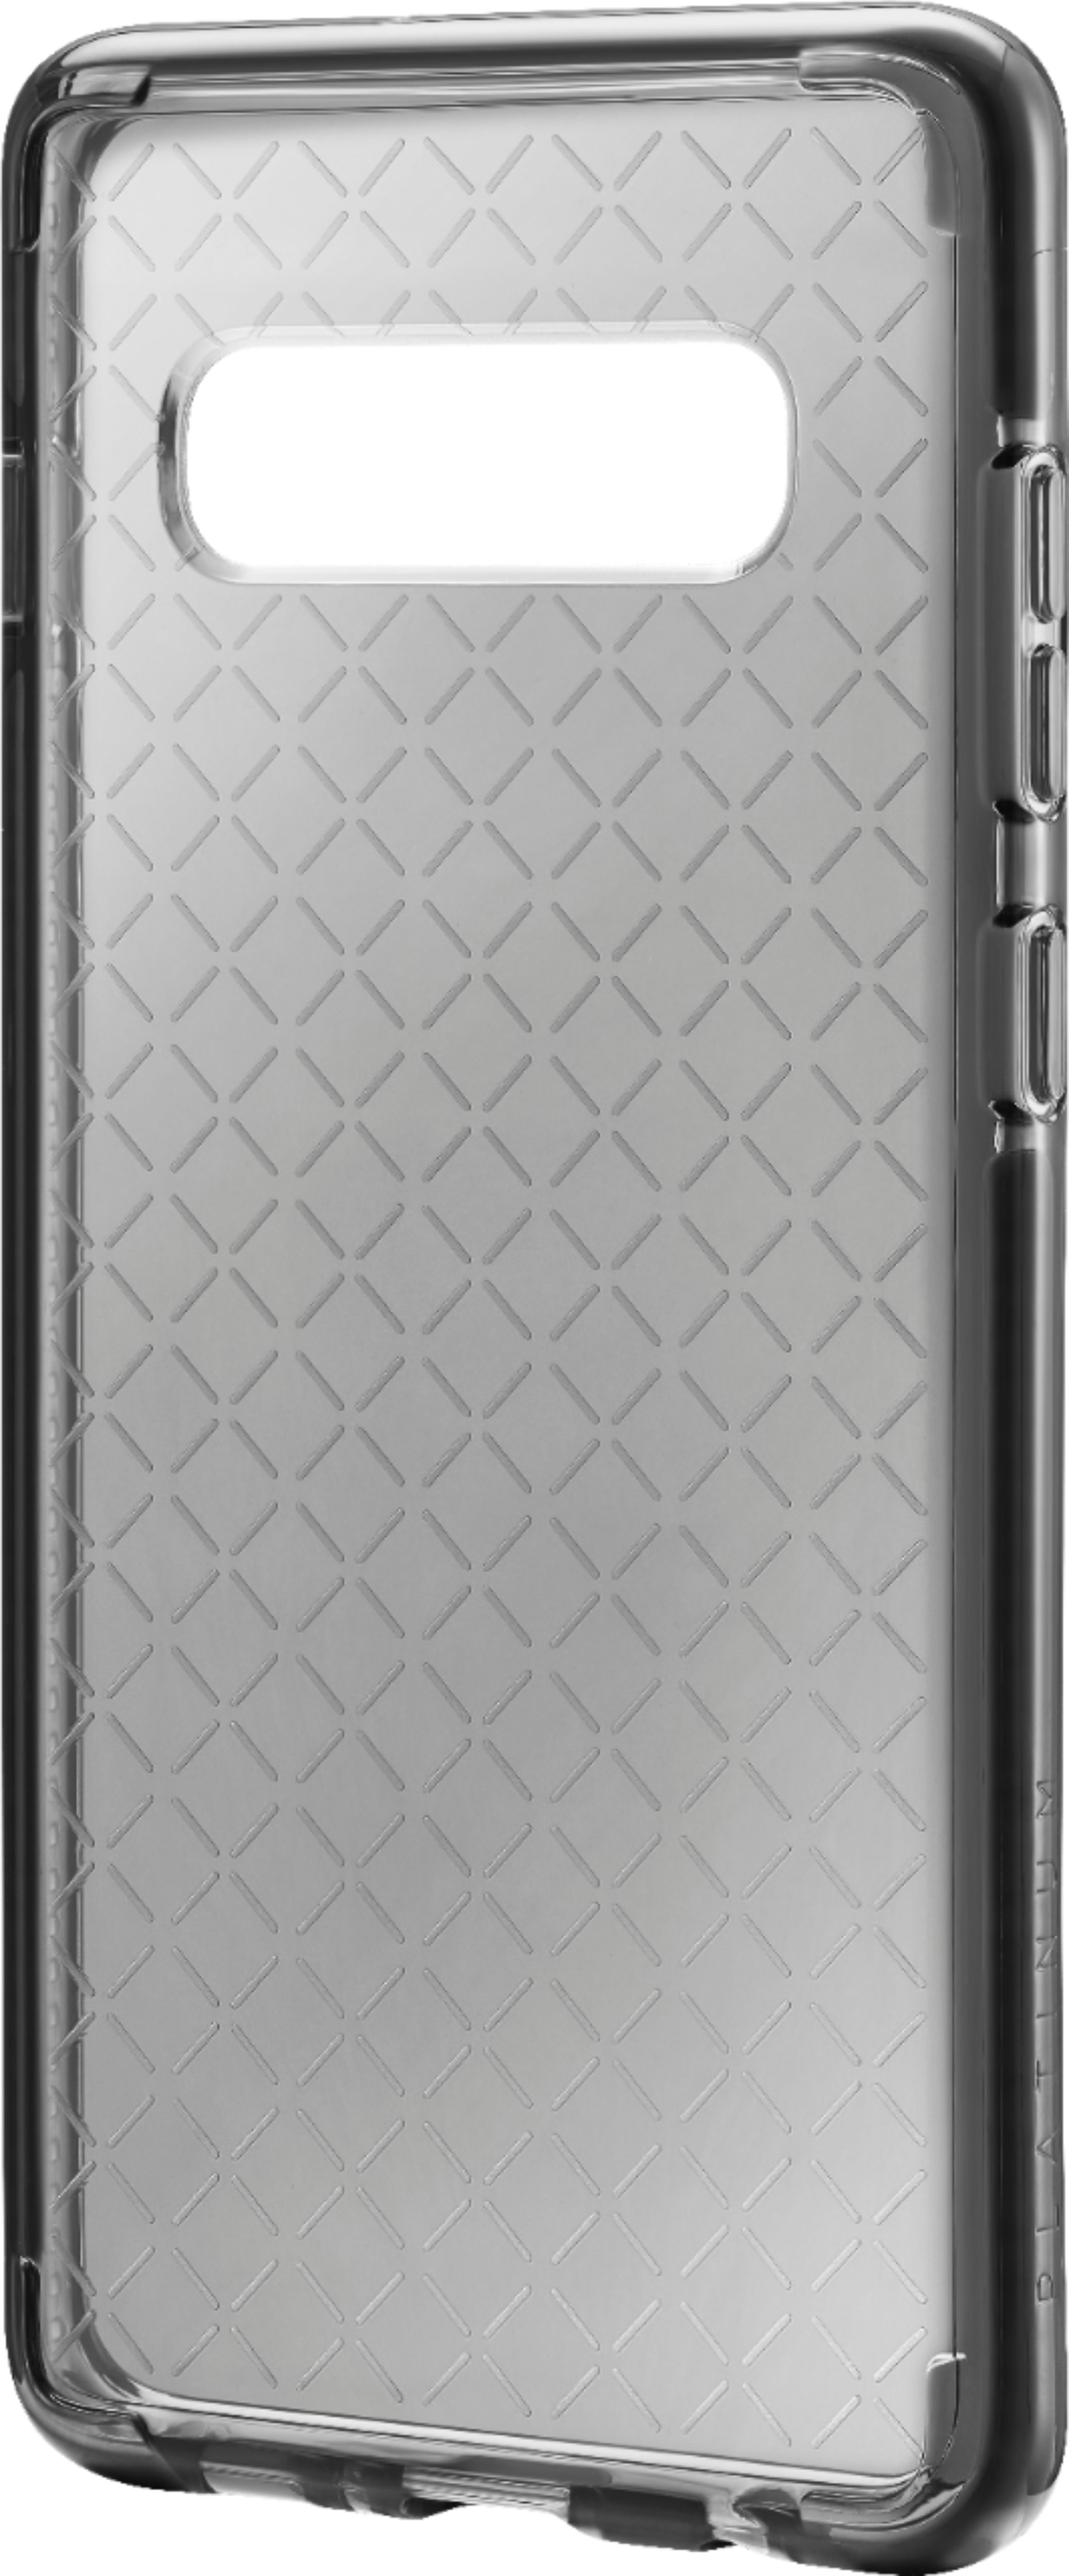 Platinum™ - Protective Case for Samsung Galaxy S10+ - Transparent Black